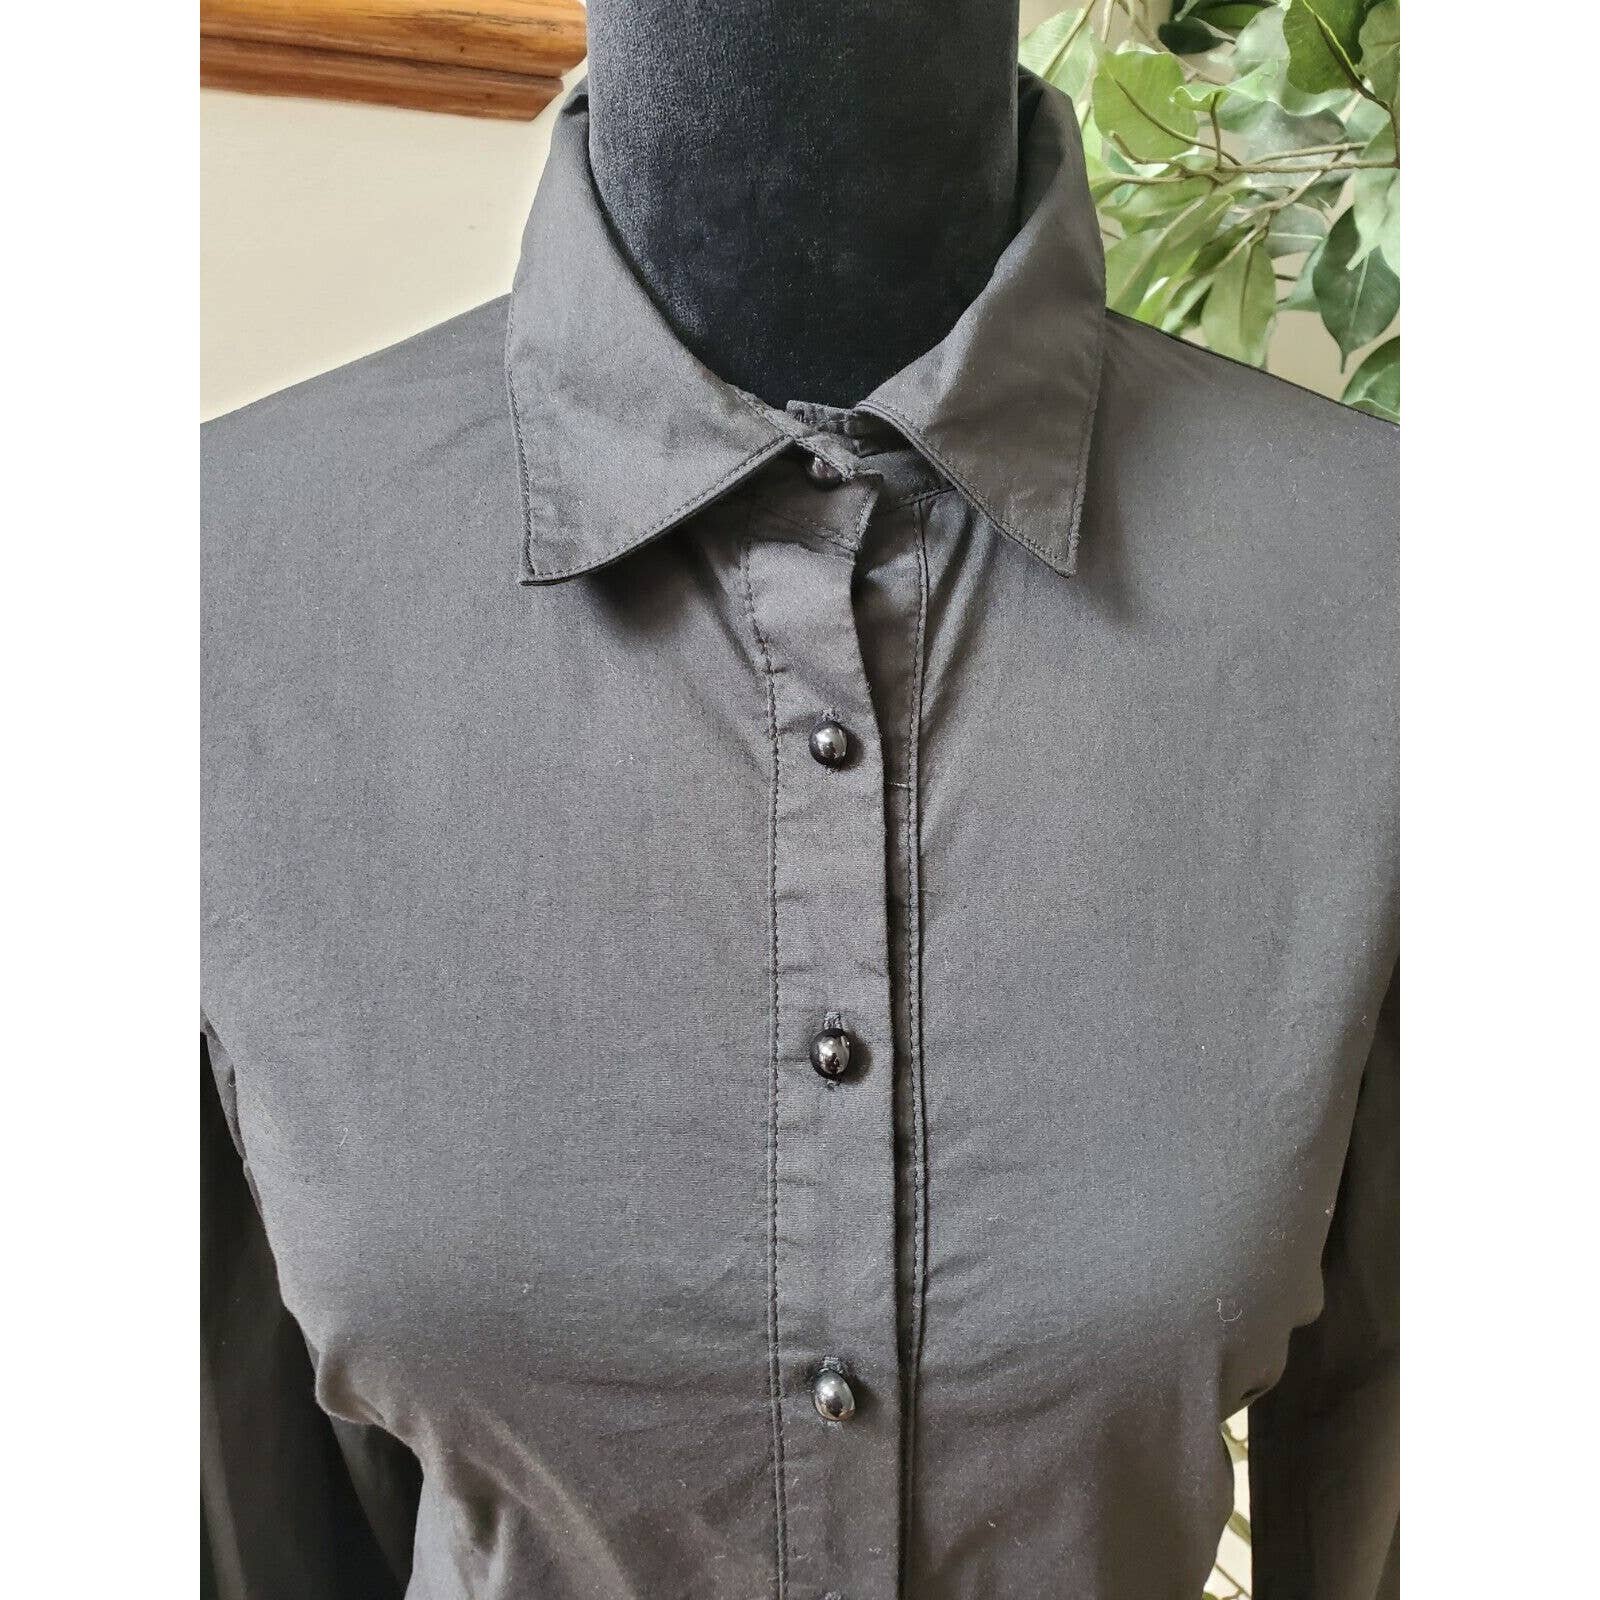 Nice Nylon Women´s Black Cotton Long Sleeve Collared Button Down Casual Shirt Large i6MJbjeUP no tax